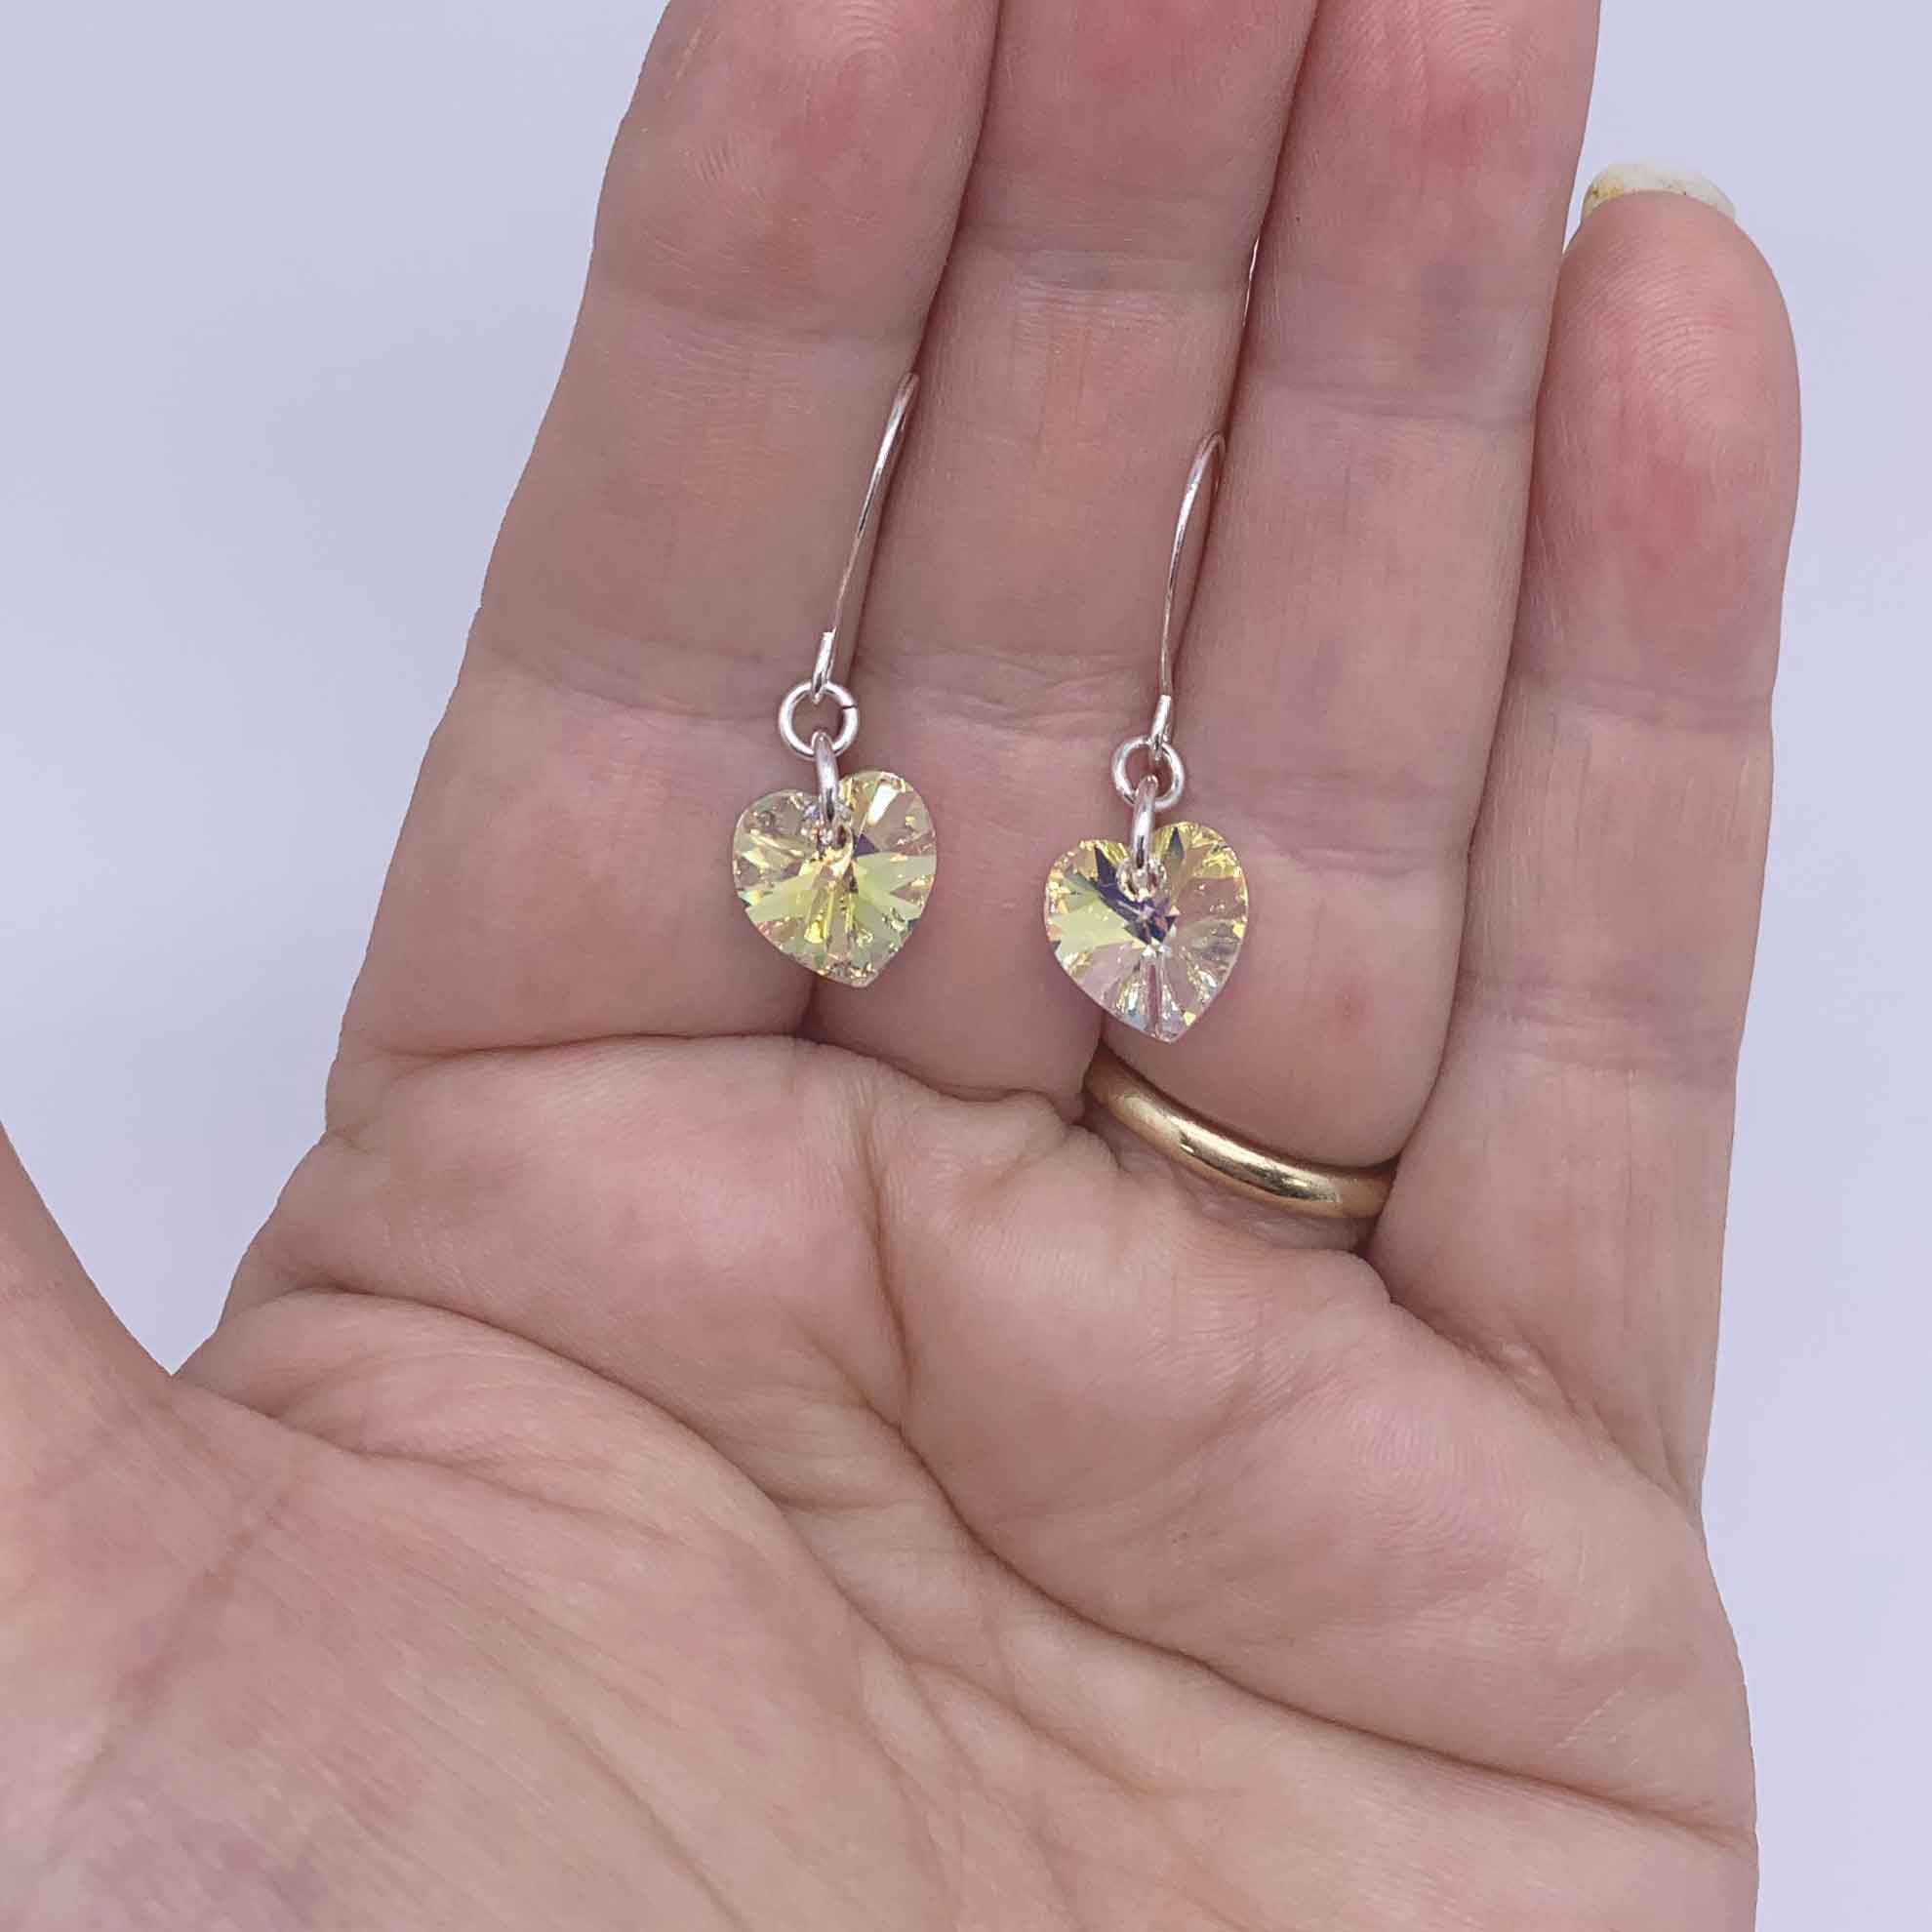 Amazon.com: Crystal Heart Earrings